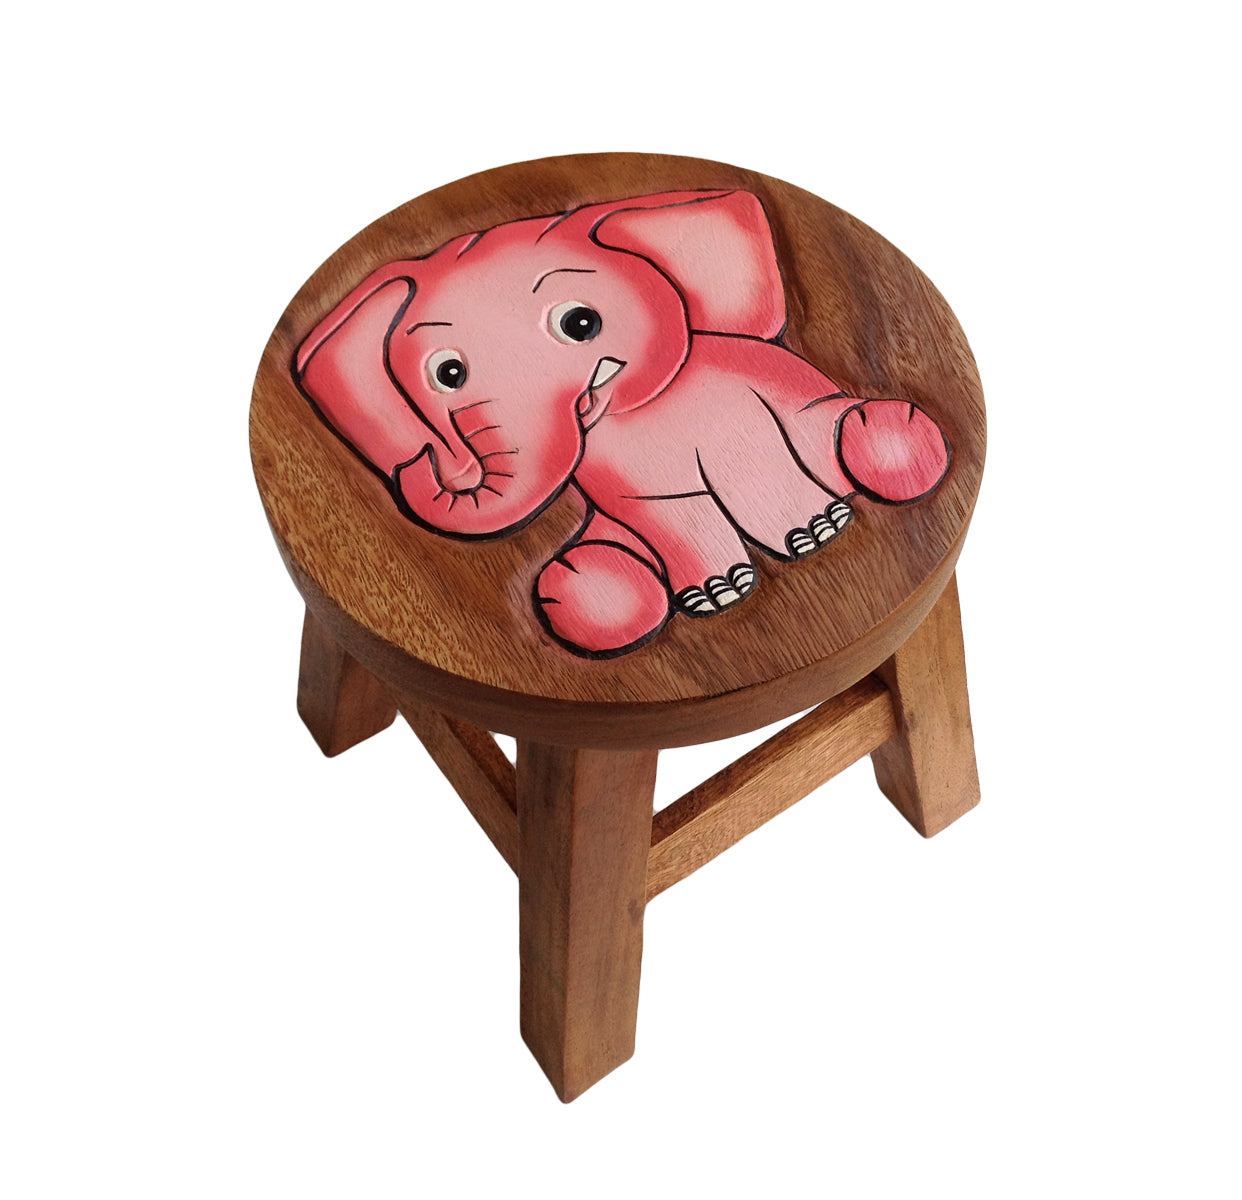 Kids Wooden Step Stool - Pink Elephant